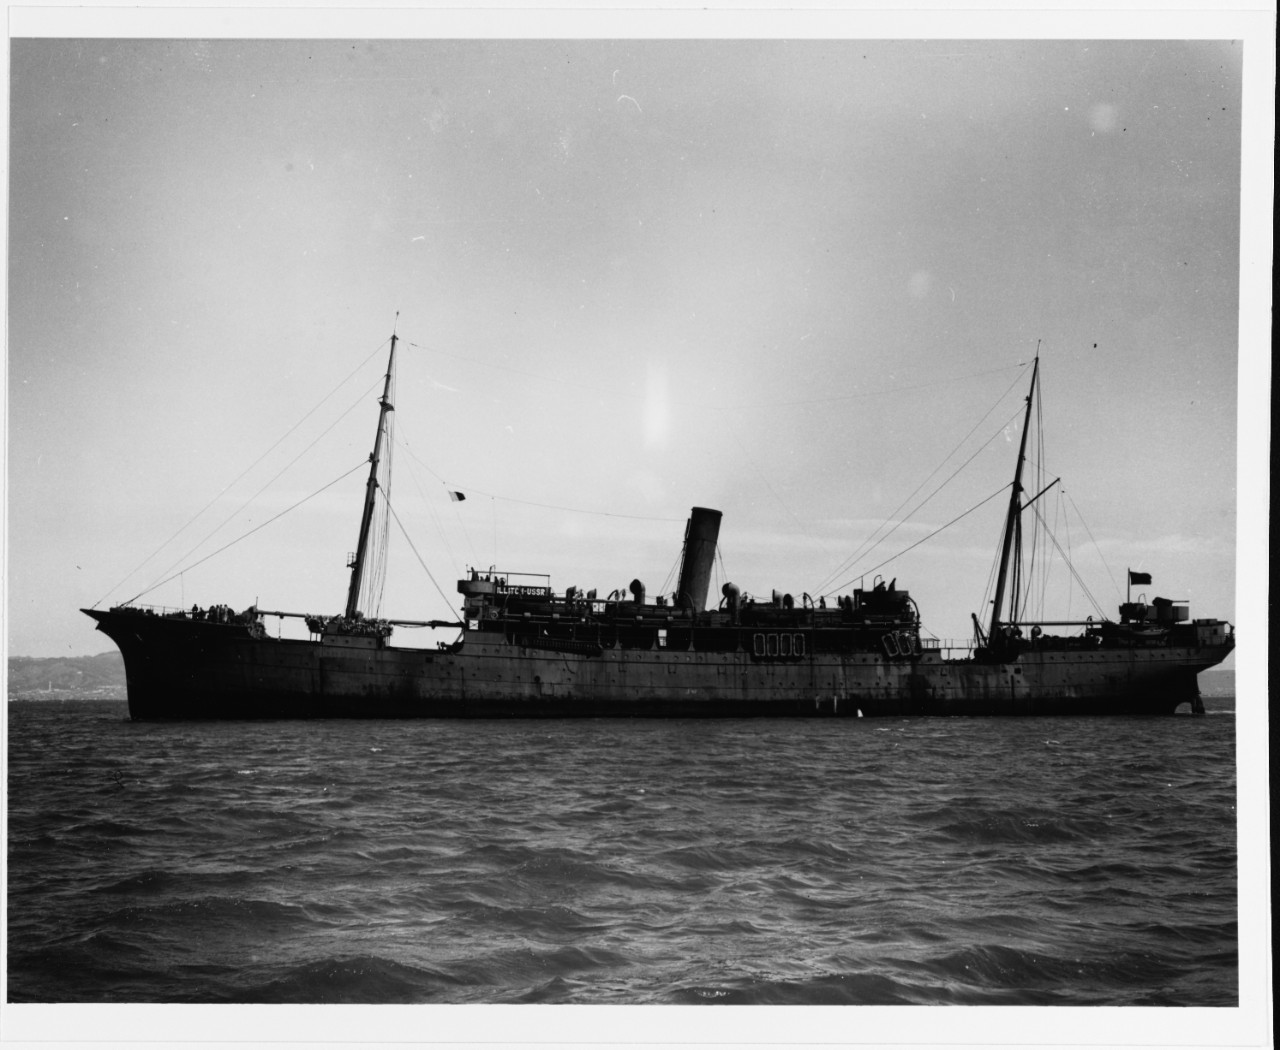 S.S. ILICH (U.S.S. R. Merchant Passenger Ship, 1895-1944)